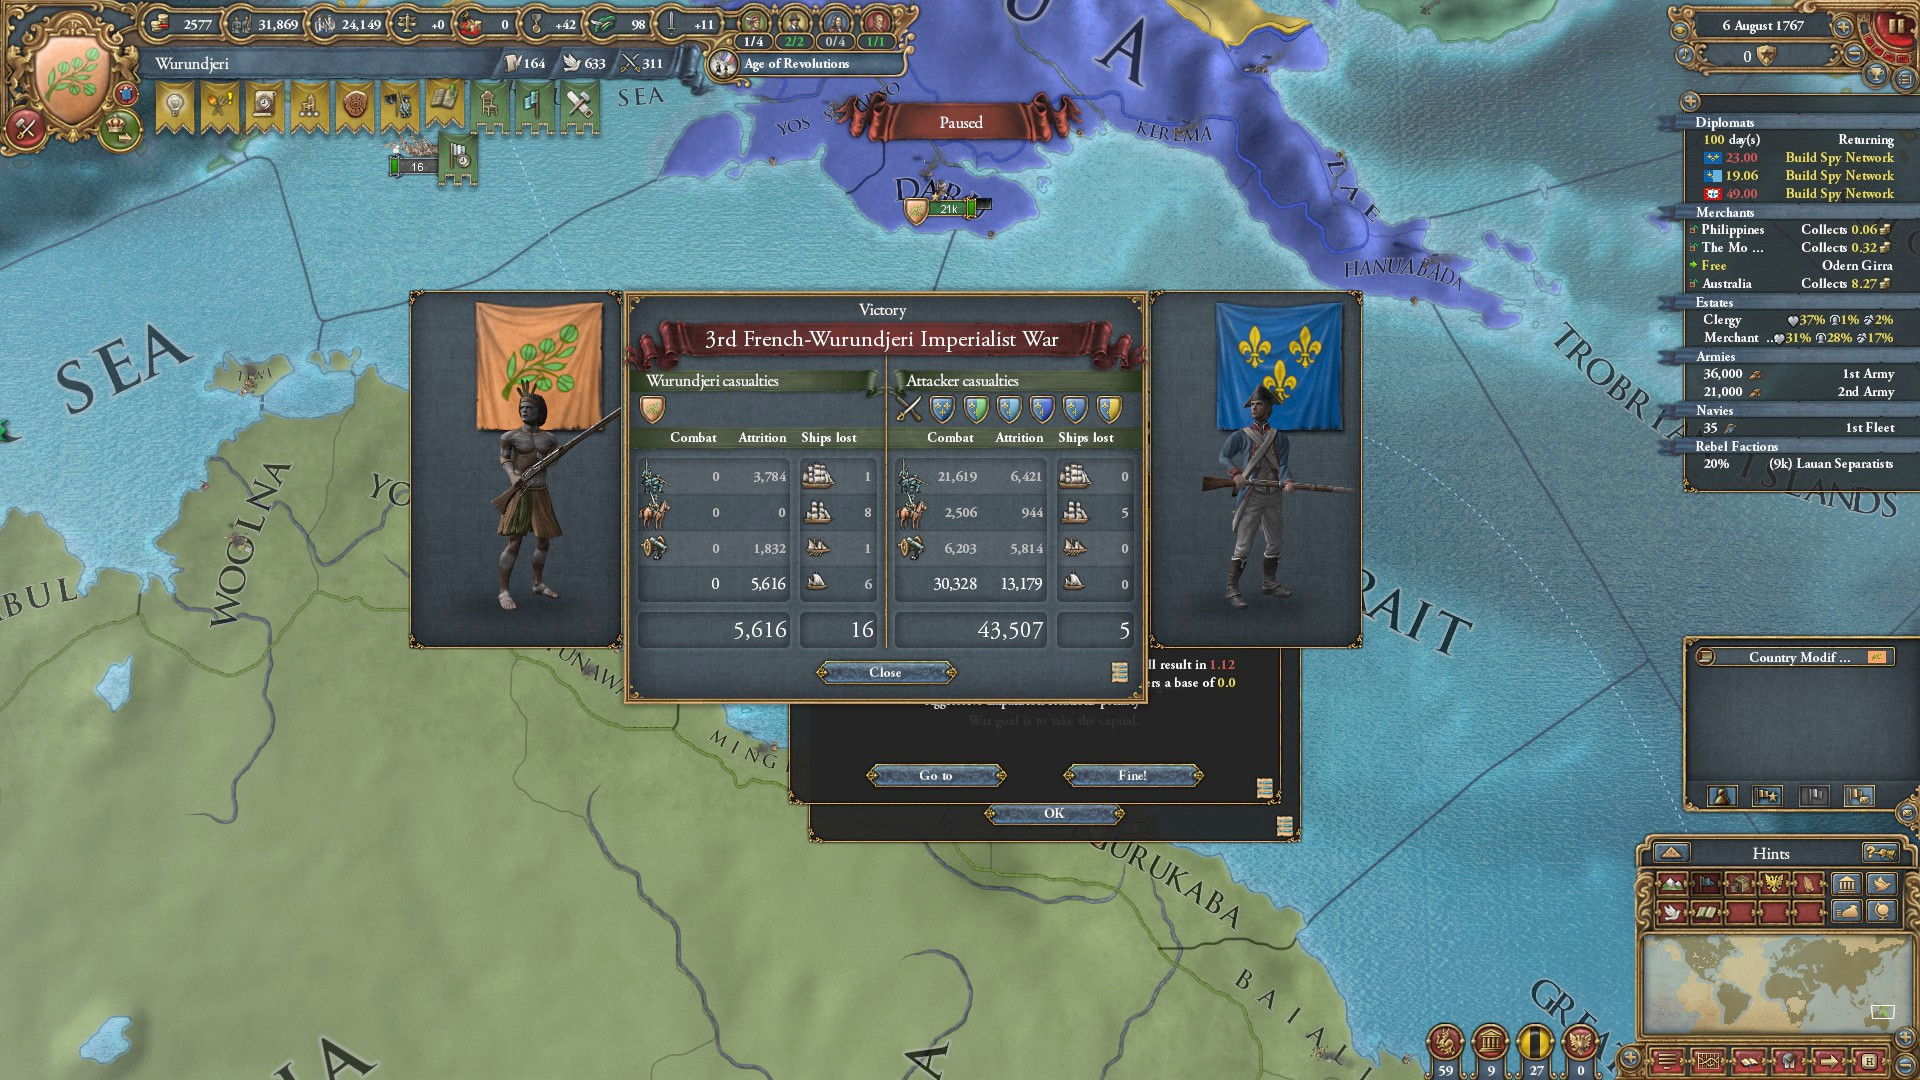 The best Europa Universalis 4 achievements - EU4 screenshot showing a post battle screen of Australia versus France